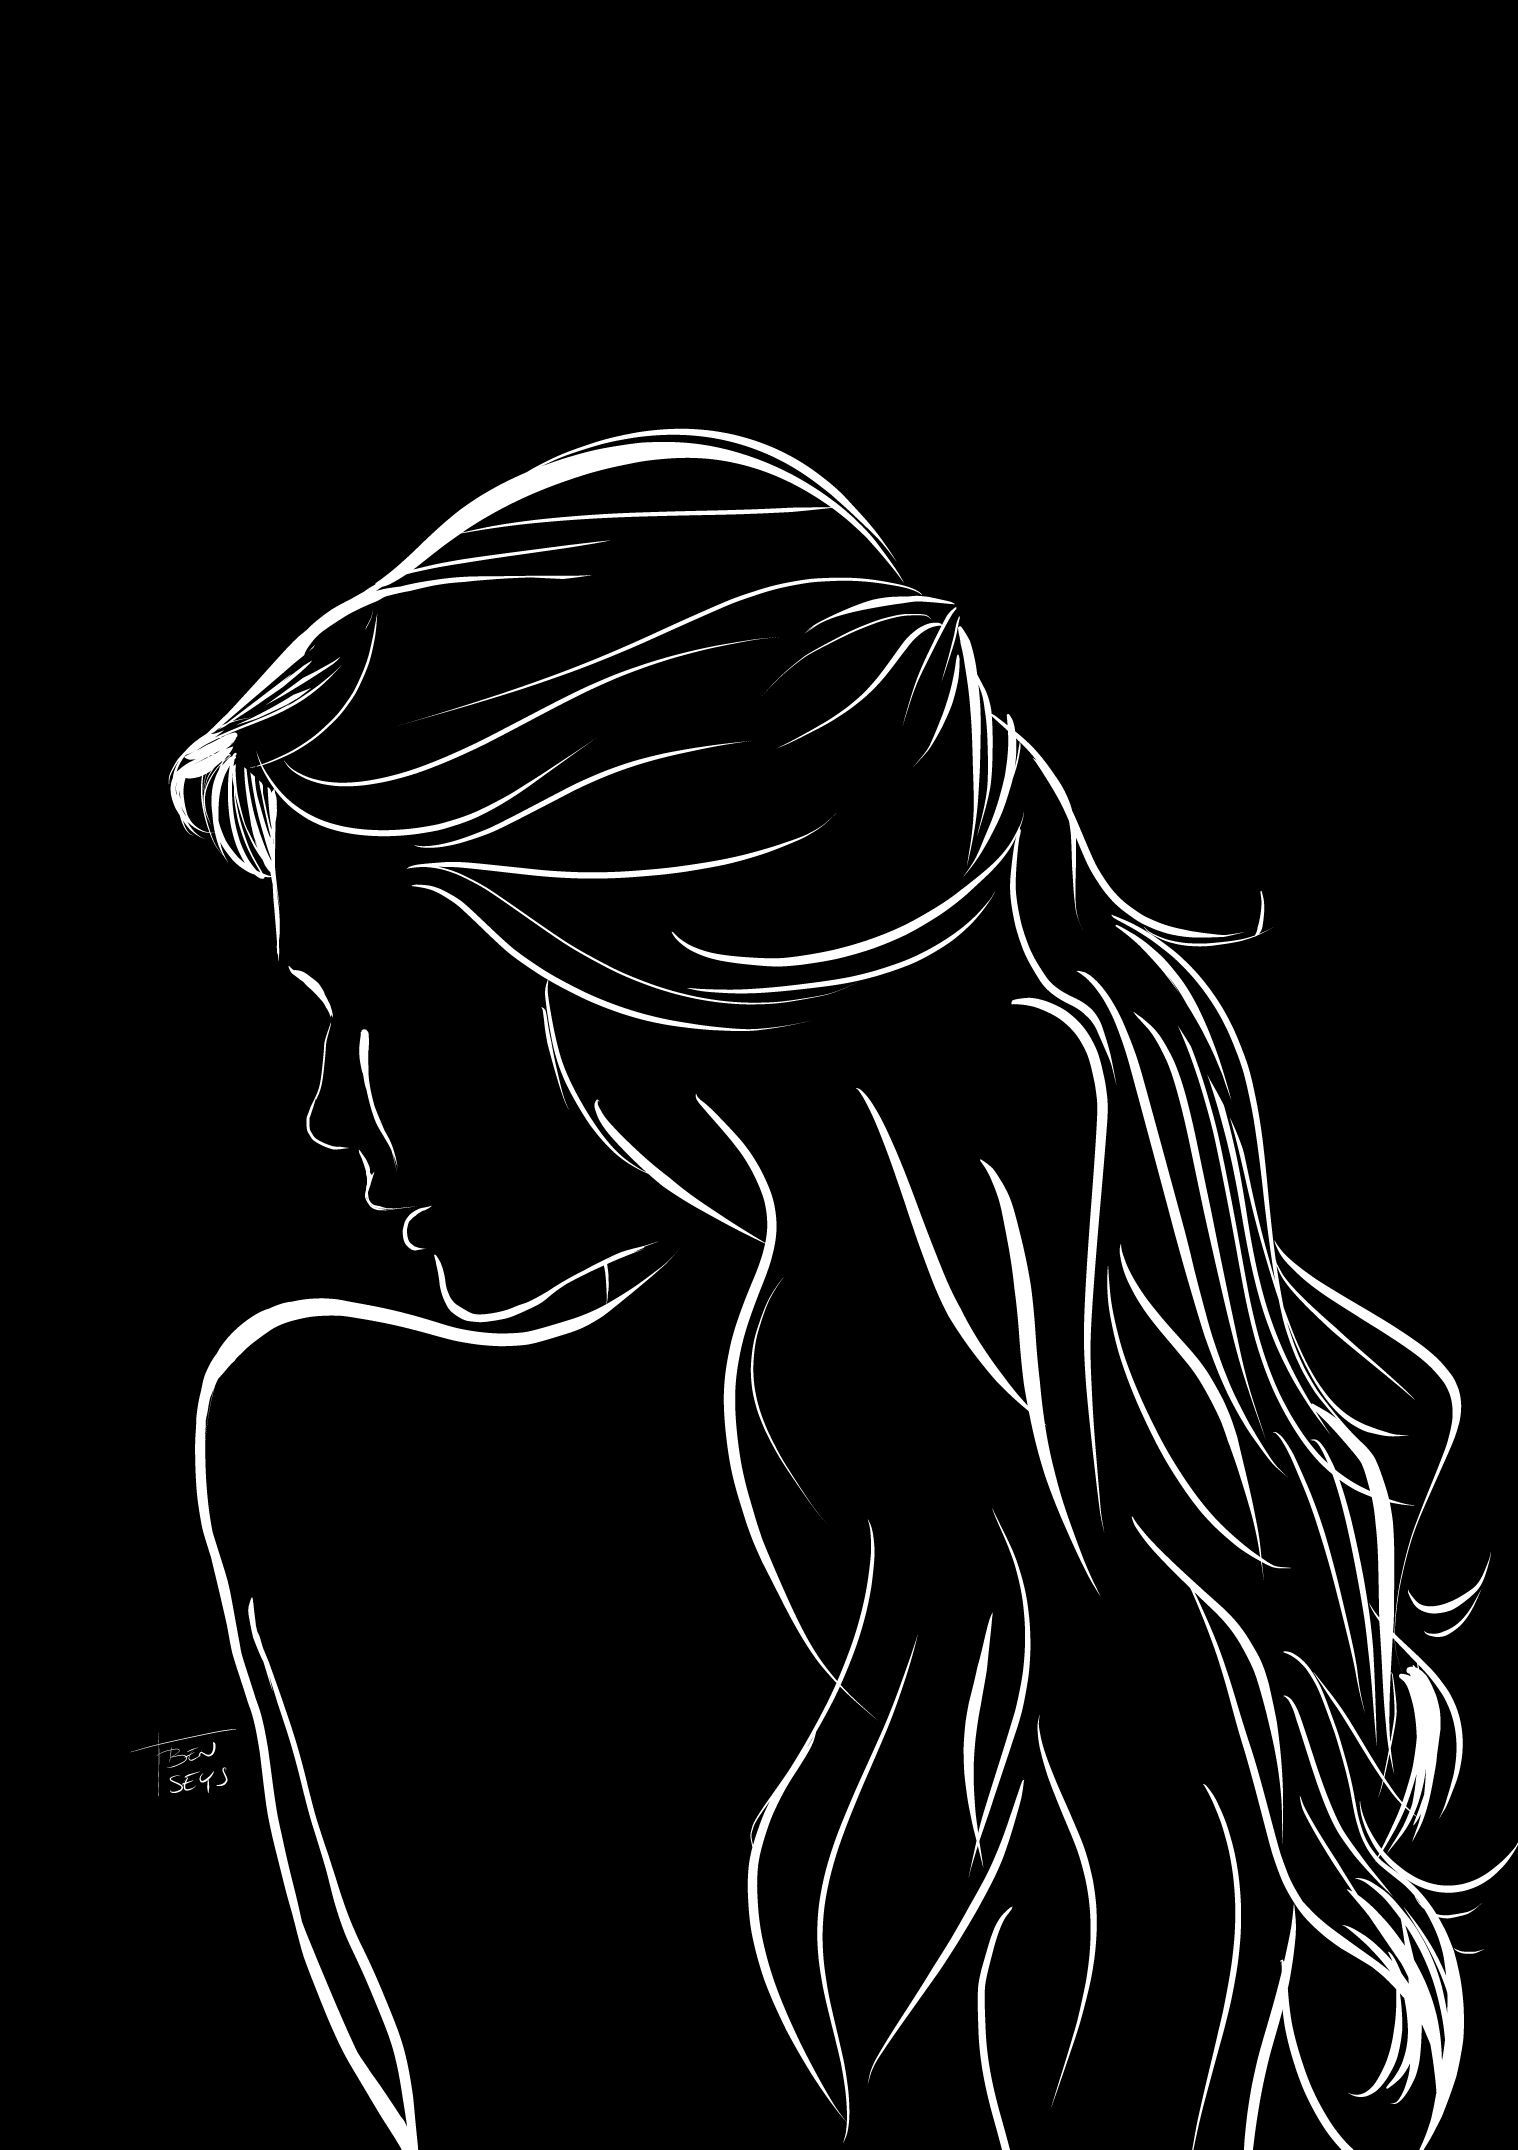 Lady by Ben Seys. Silhouette art, Black and white art drawing, Romantic art